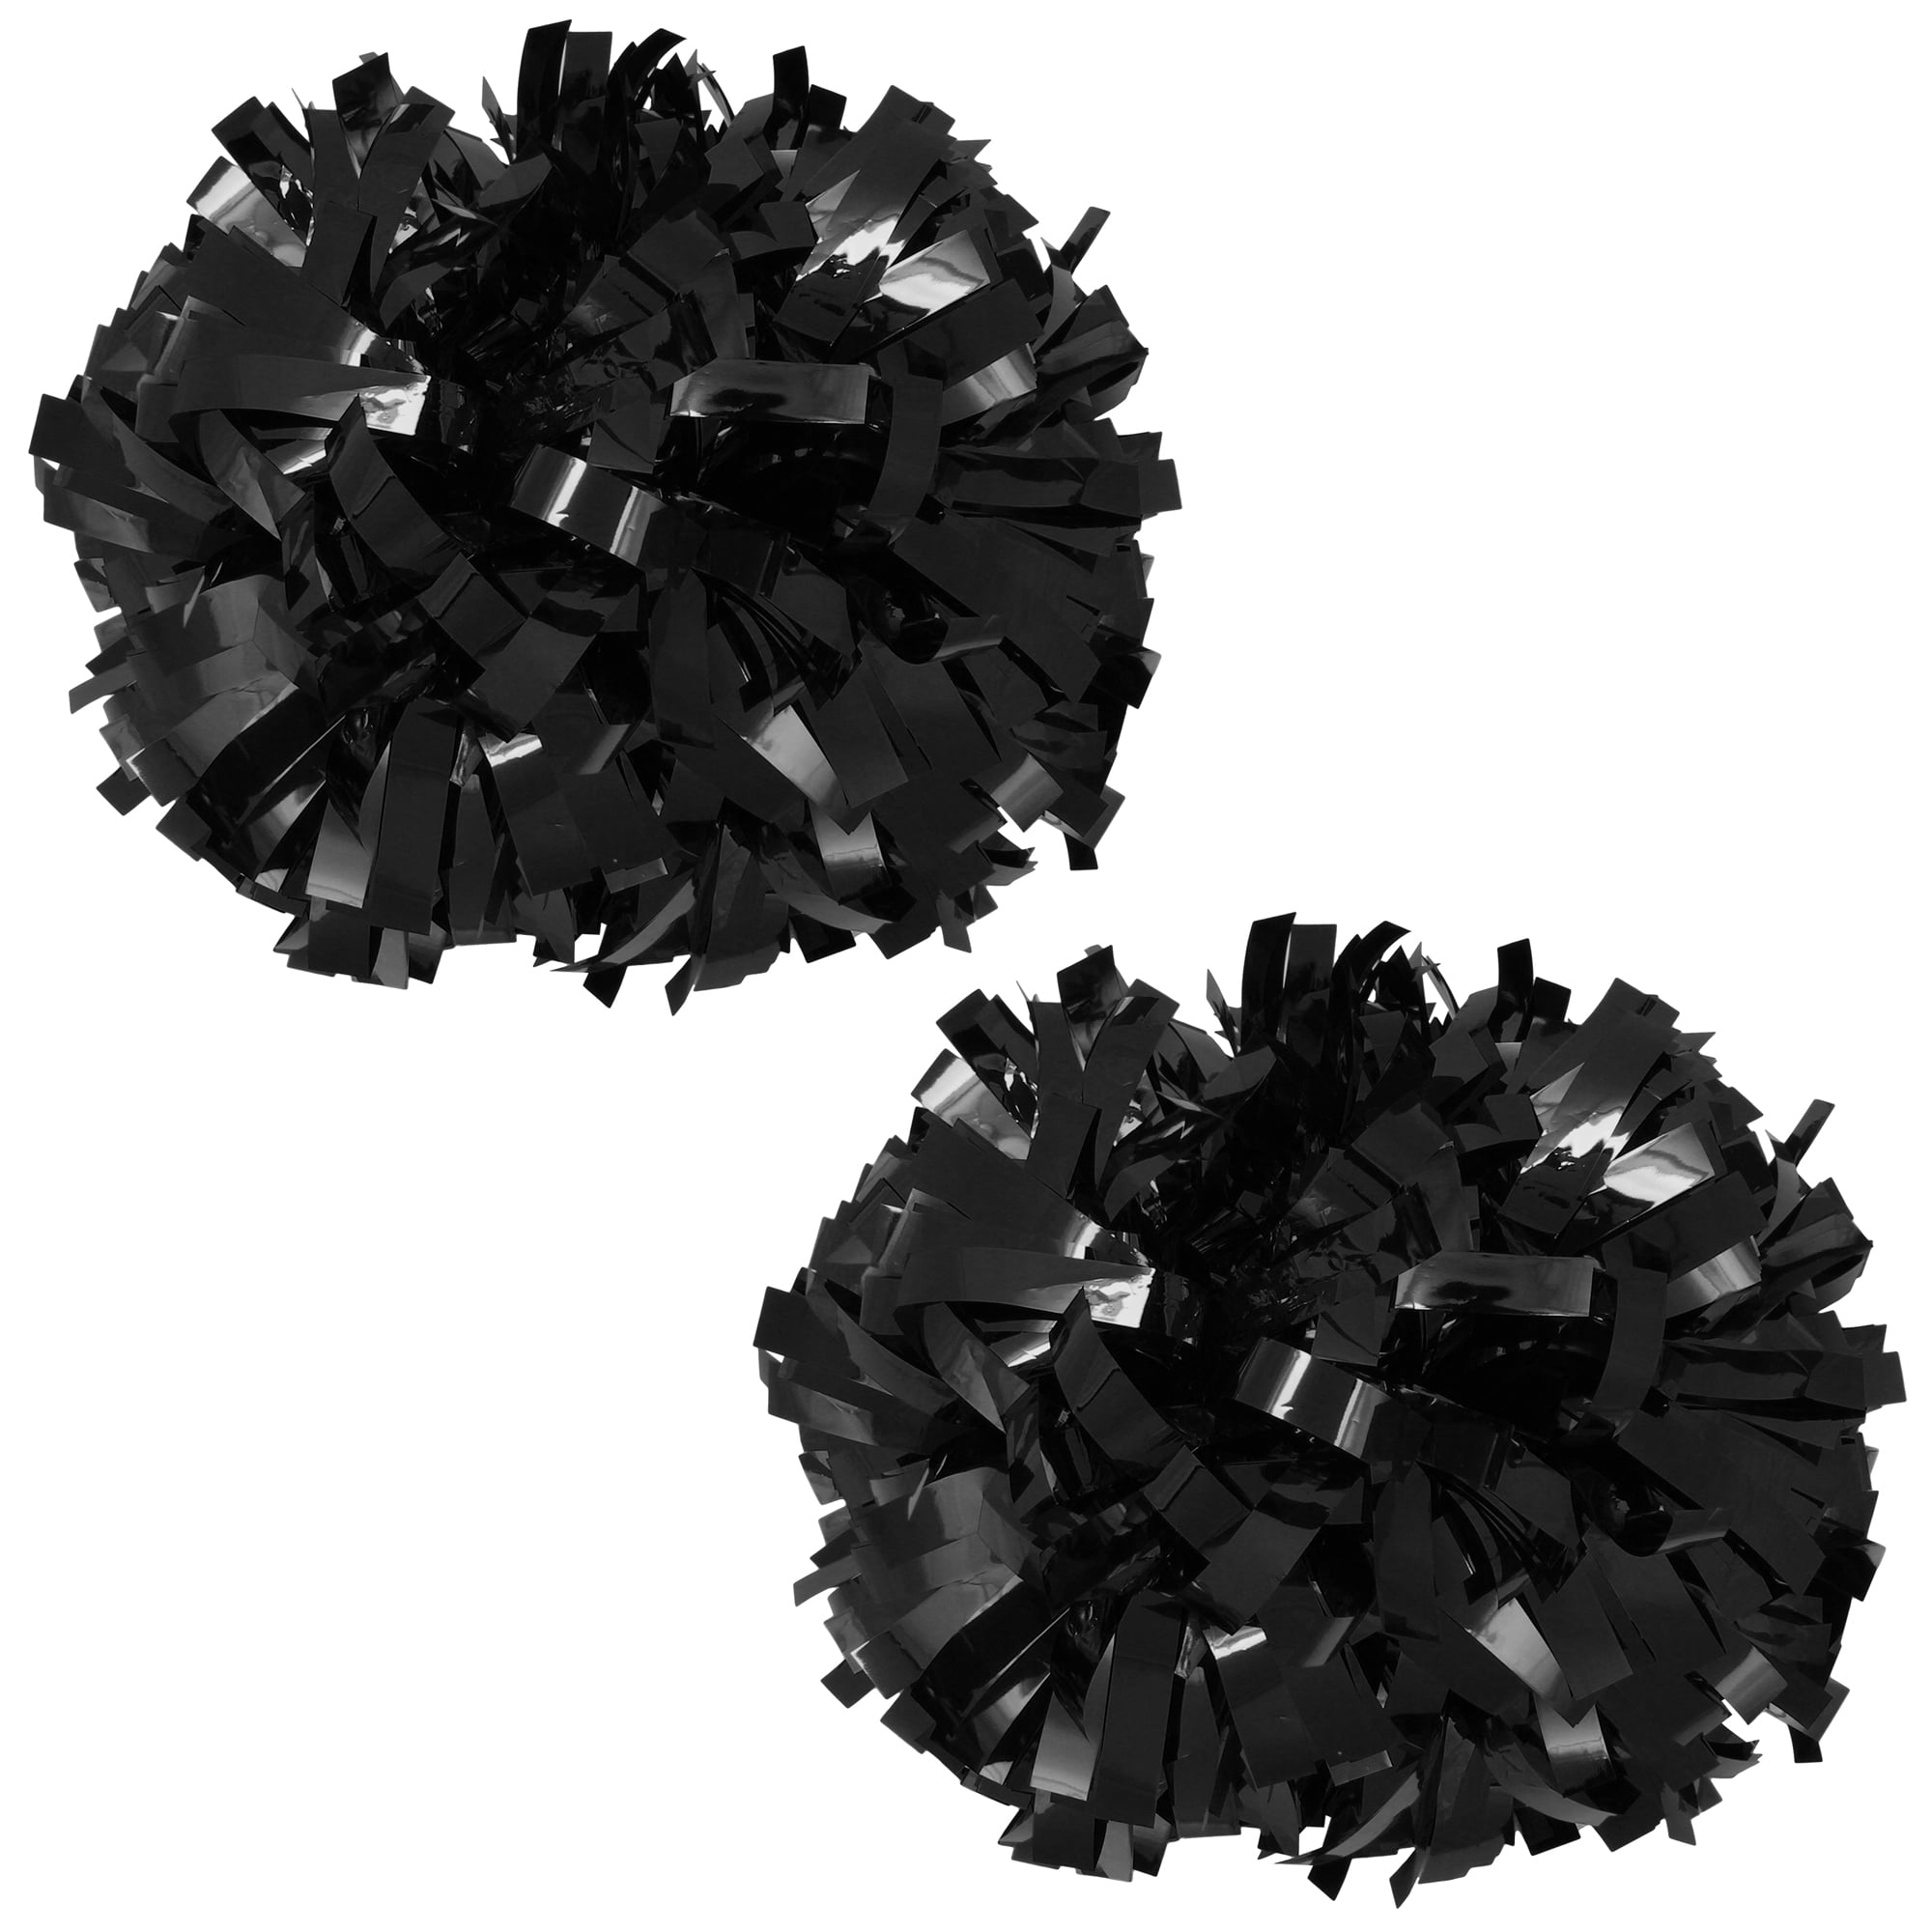 Metallic Cheer Pom Poms Cheerleading Cheerleader Gear 2 pieces one pair  poms(Black)